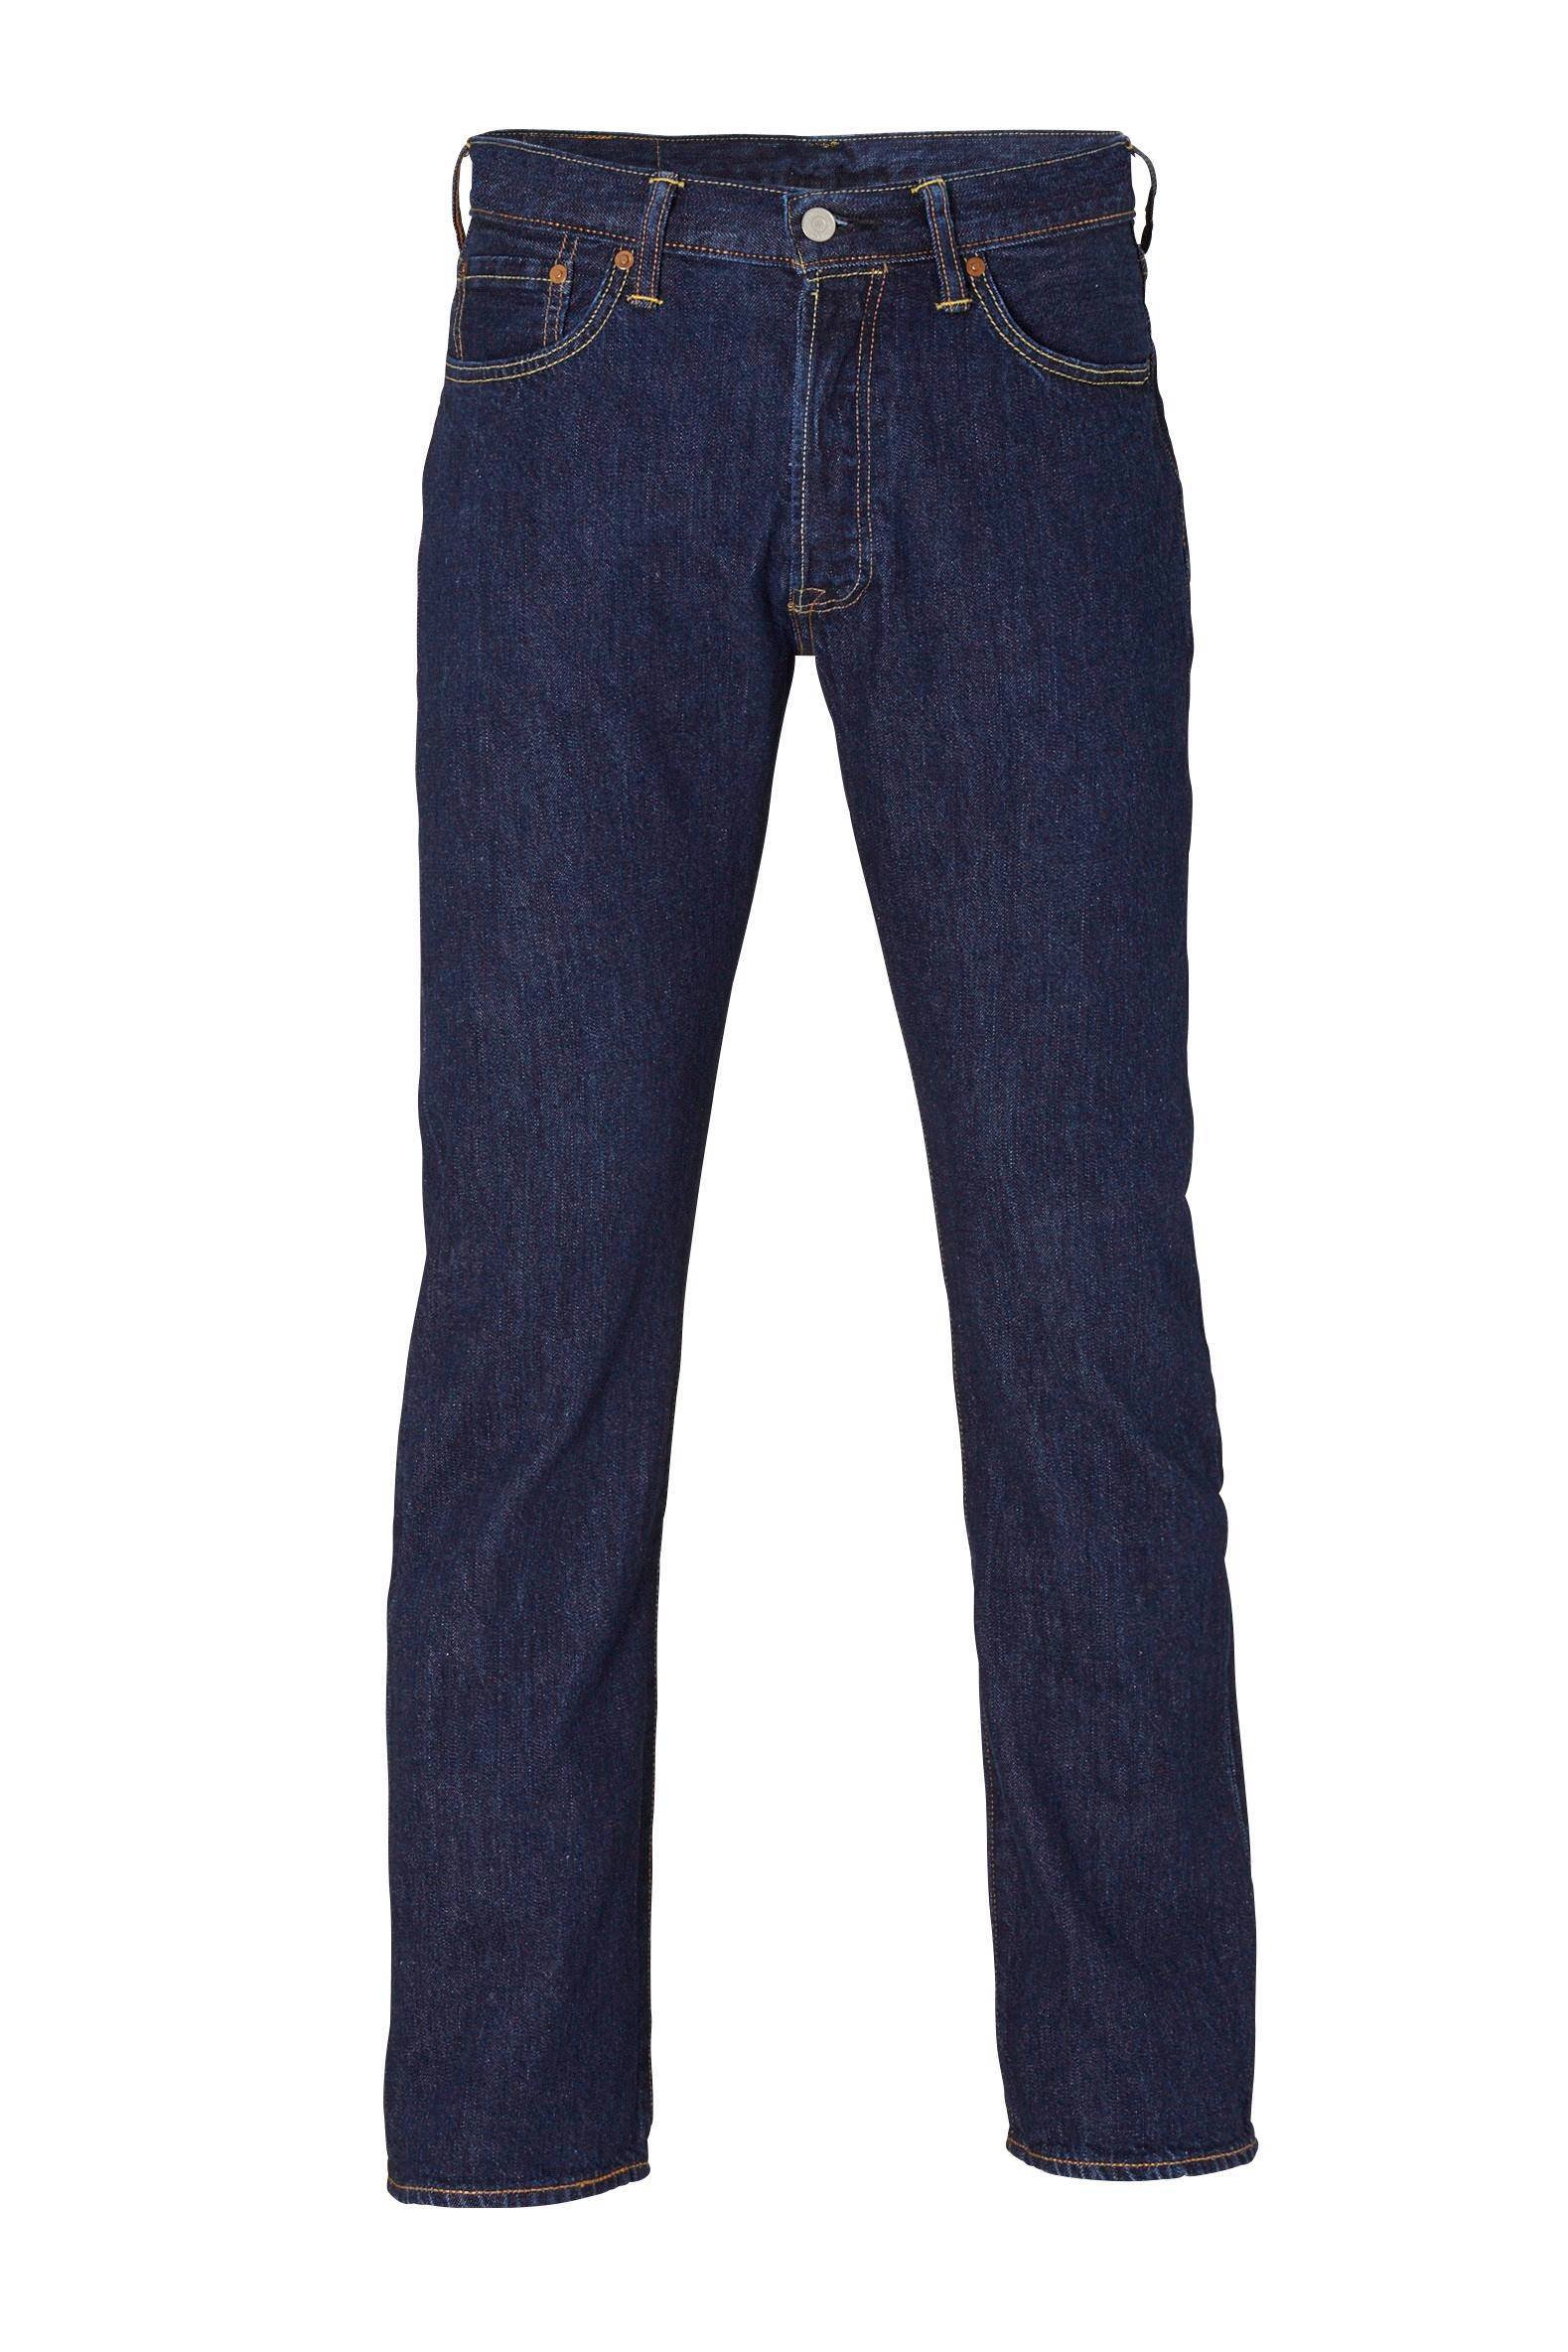 Levi's 501 regular fit jeans dark blue 